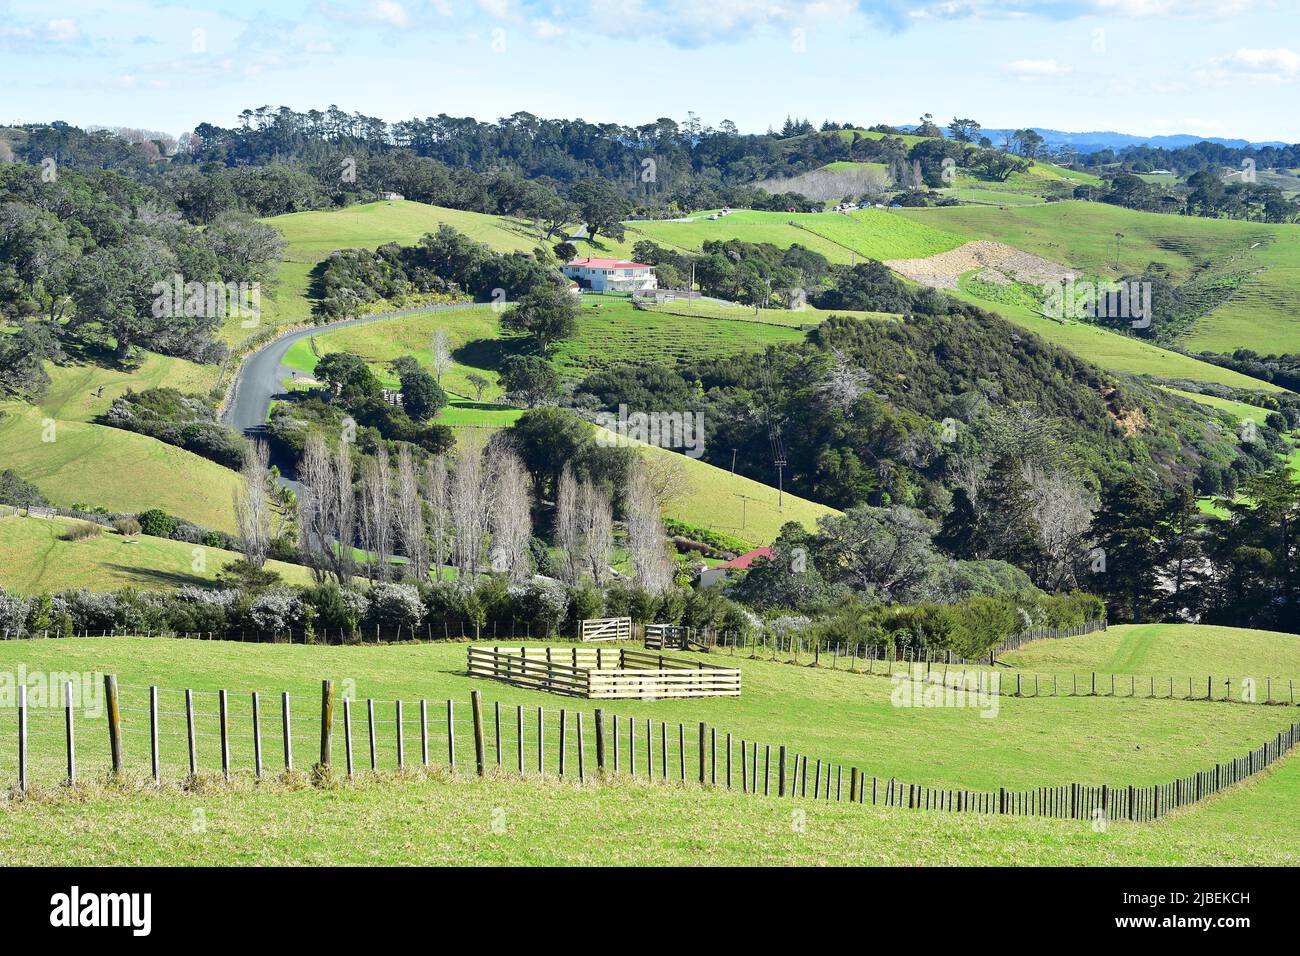 Former homestead of Scandrett family surrounded by farmland in what is now Scandrett Regional Park. Location: Mahurangi East New Zealand Stock Photo